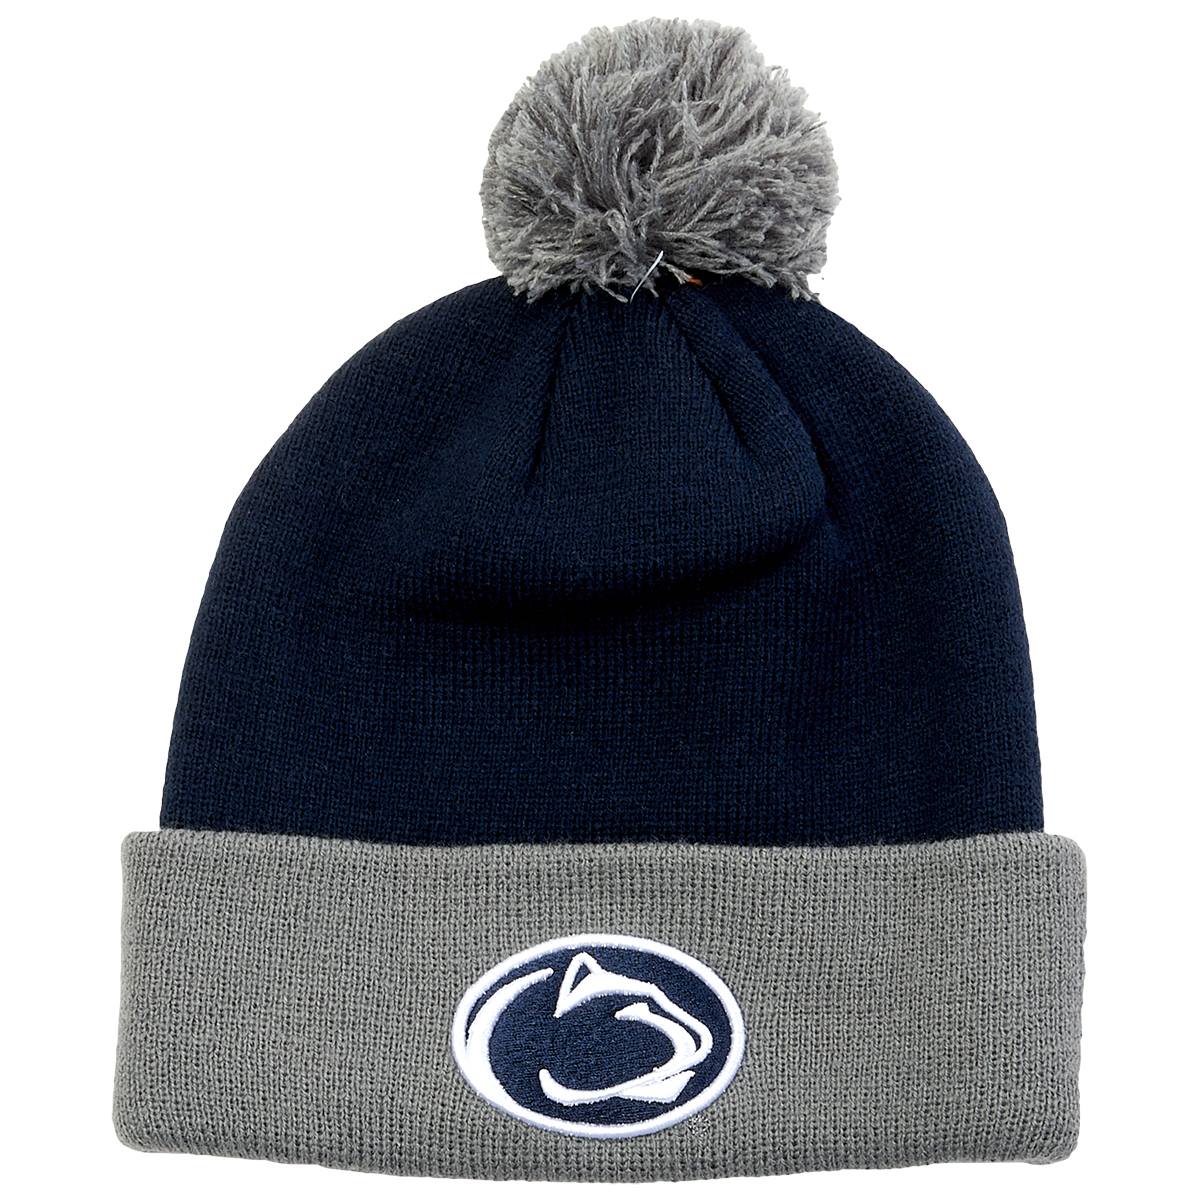 Mens Fanatics Penn State Tow Cuff Two-Tone Winter Hat